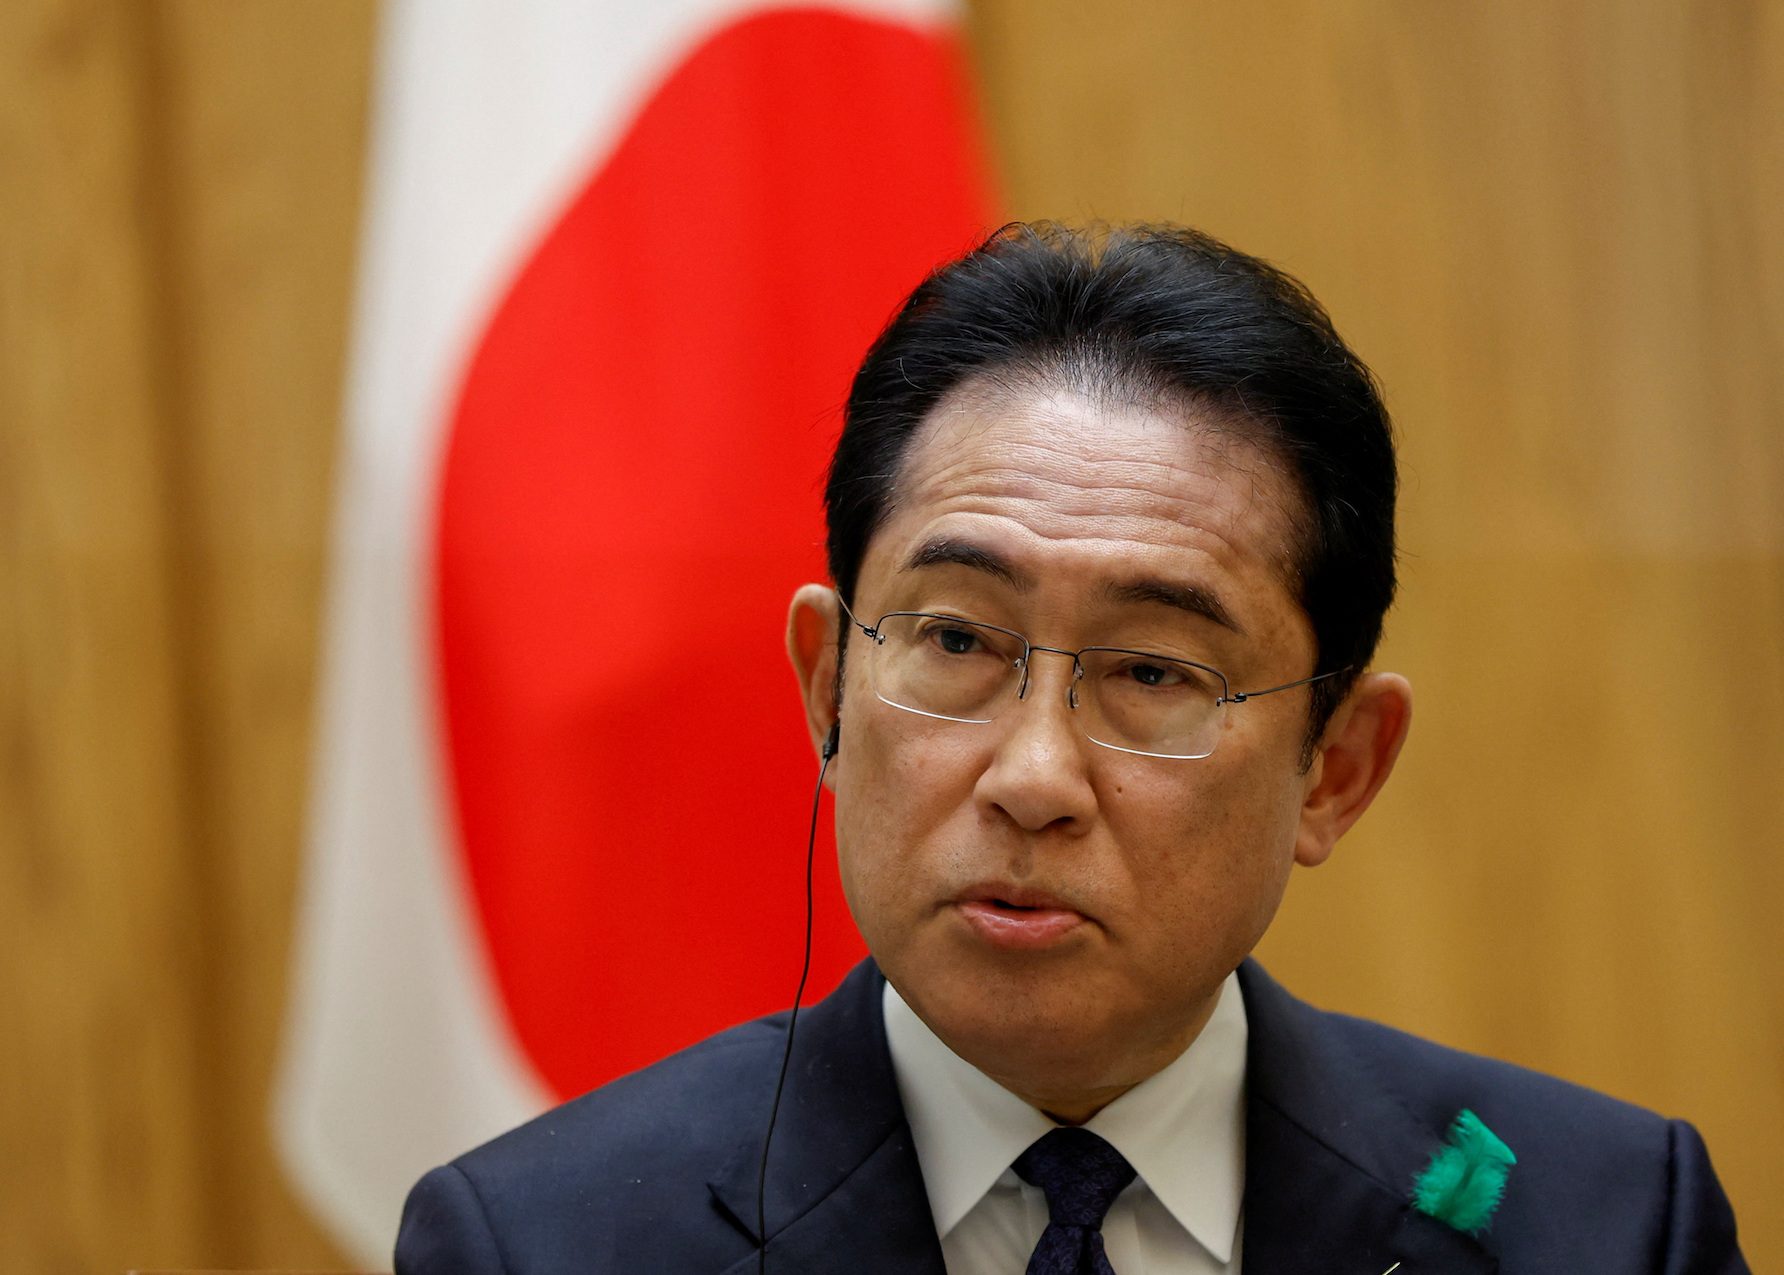 Japan will keep calling for China to act responsibly, Kishida says